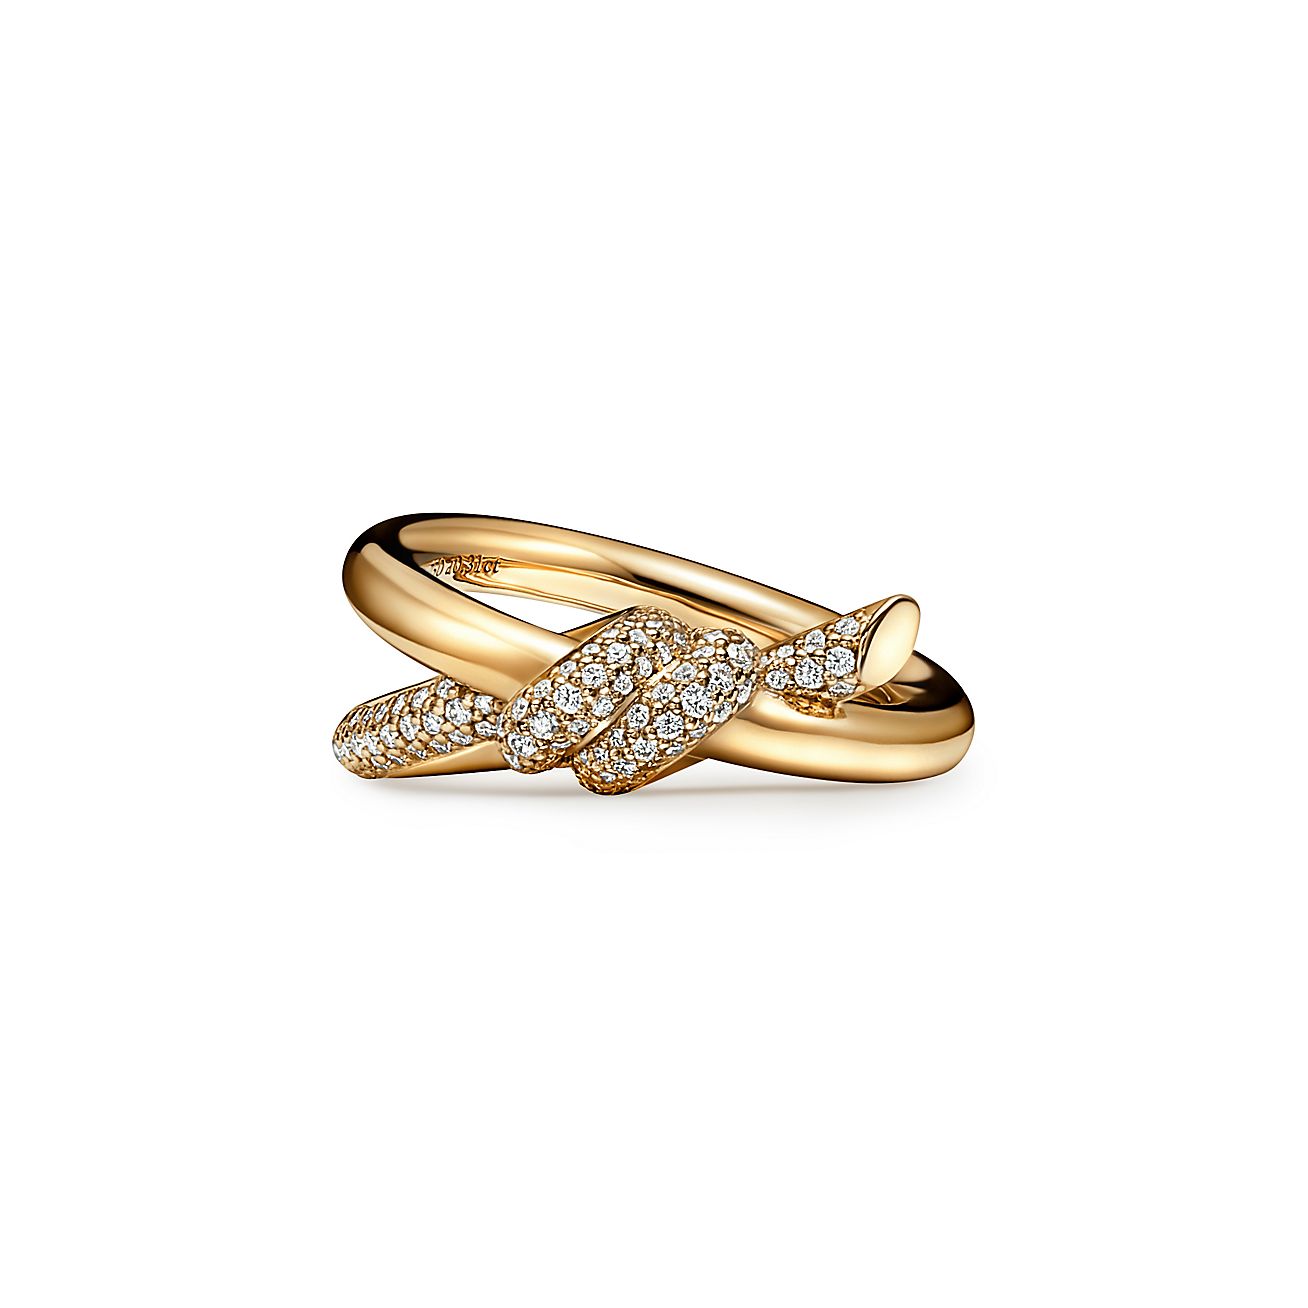 Bague double rang Tiffany Knot en or jaune 18 carats et diamants - Size 9 1/2 Tiffany & Co.